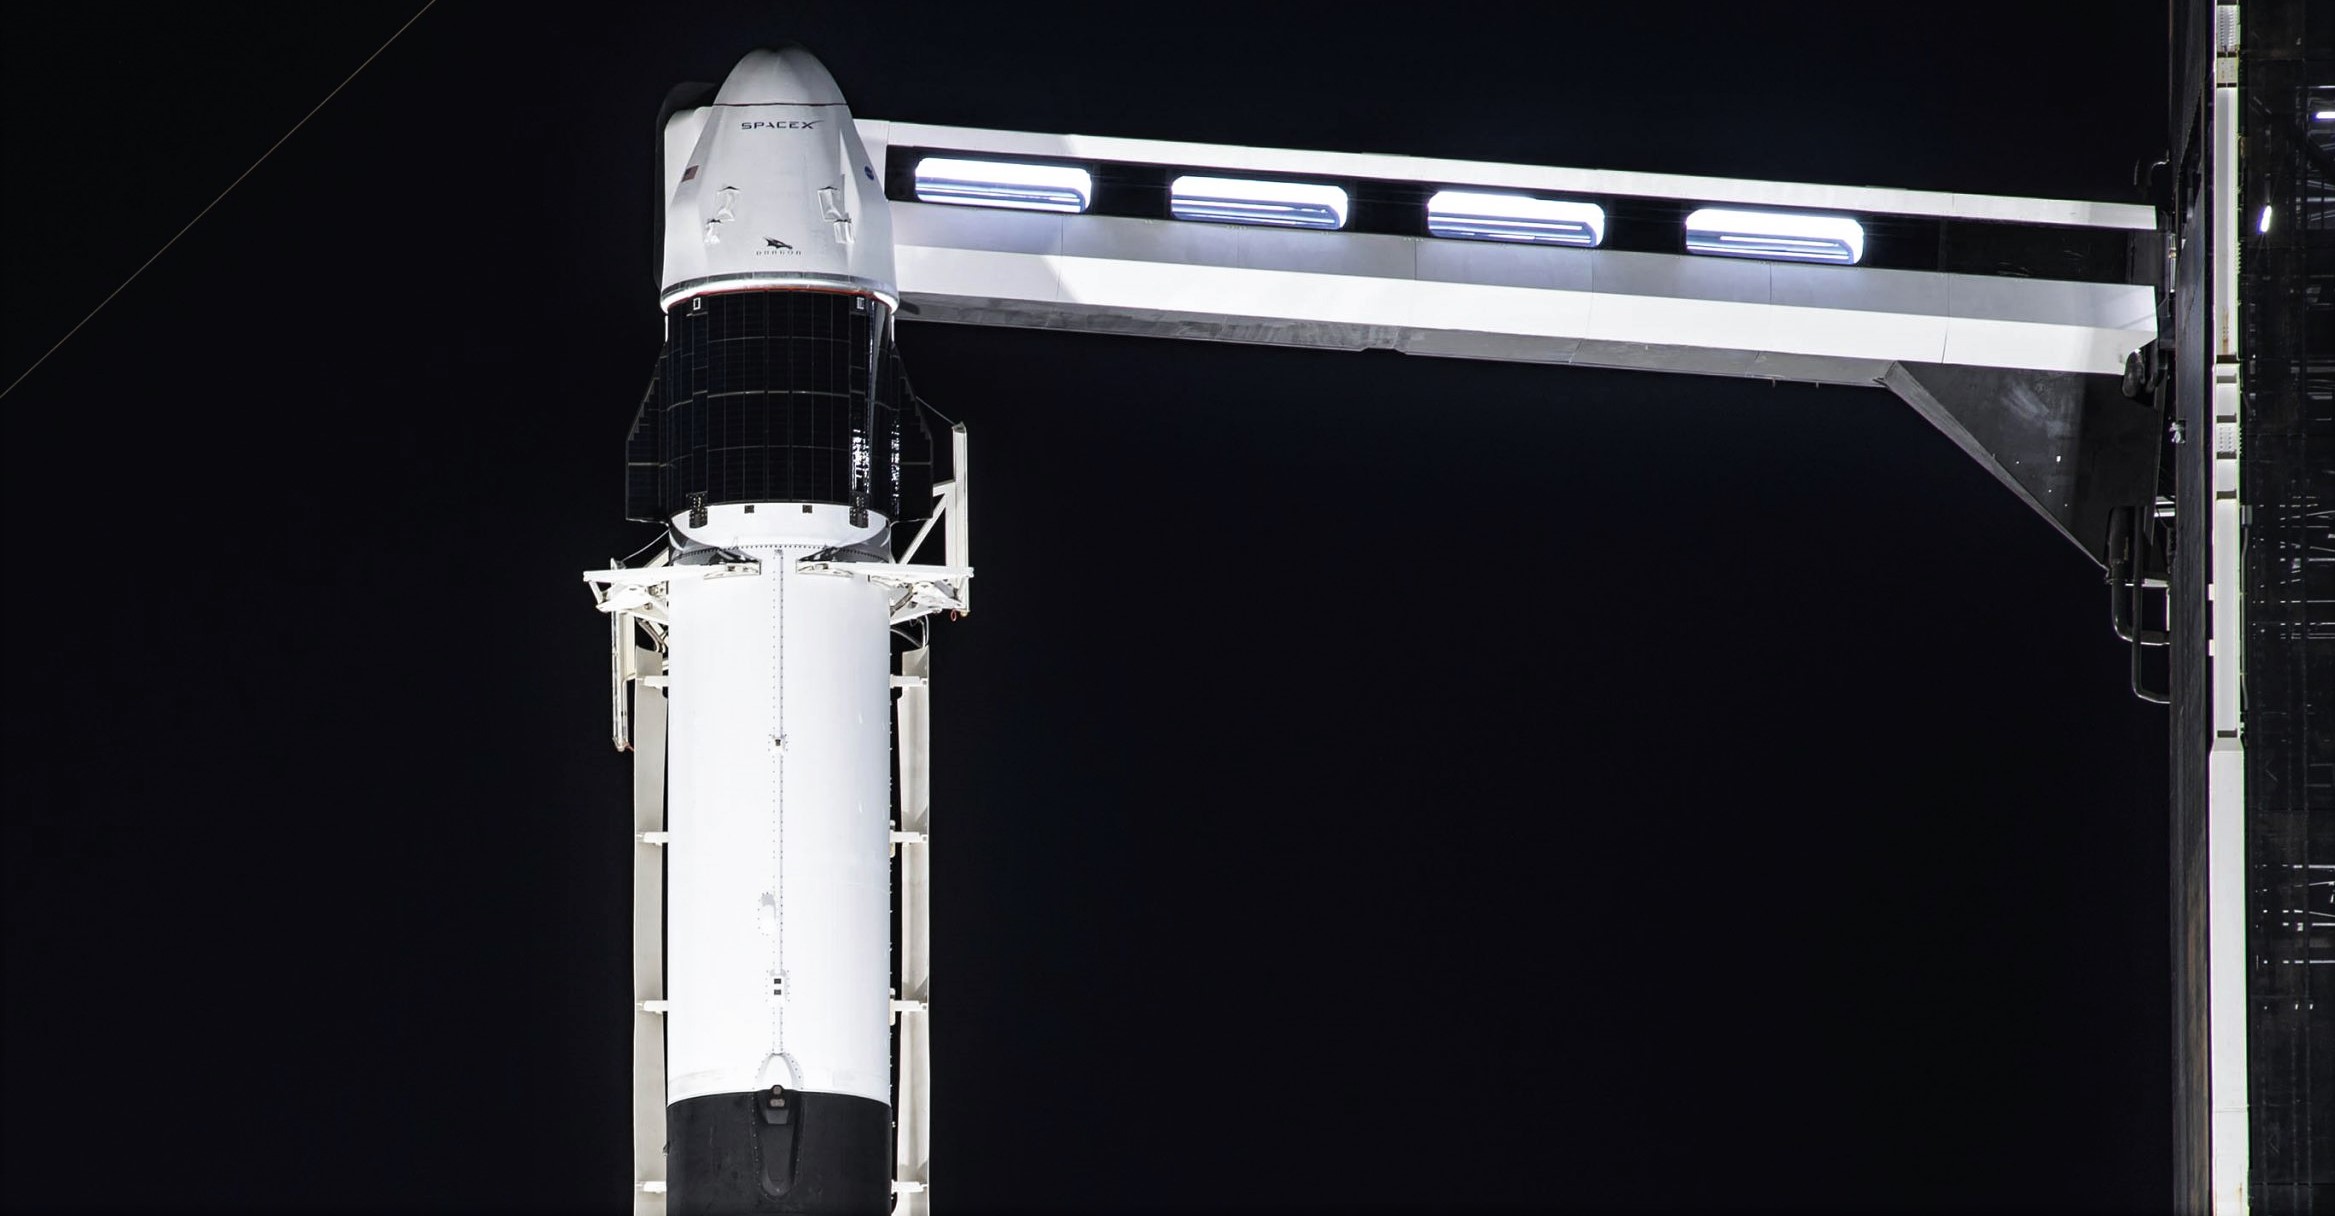 CRS-21 Cargo Dragon 2 Falcon 9 B1058 120220 (SpaceX) vertical 2 crop